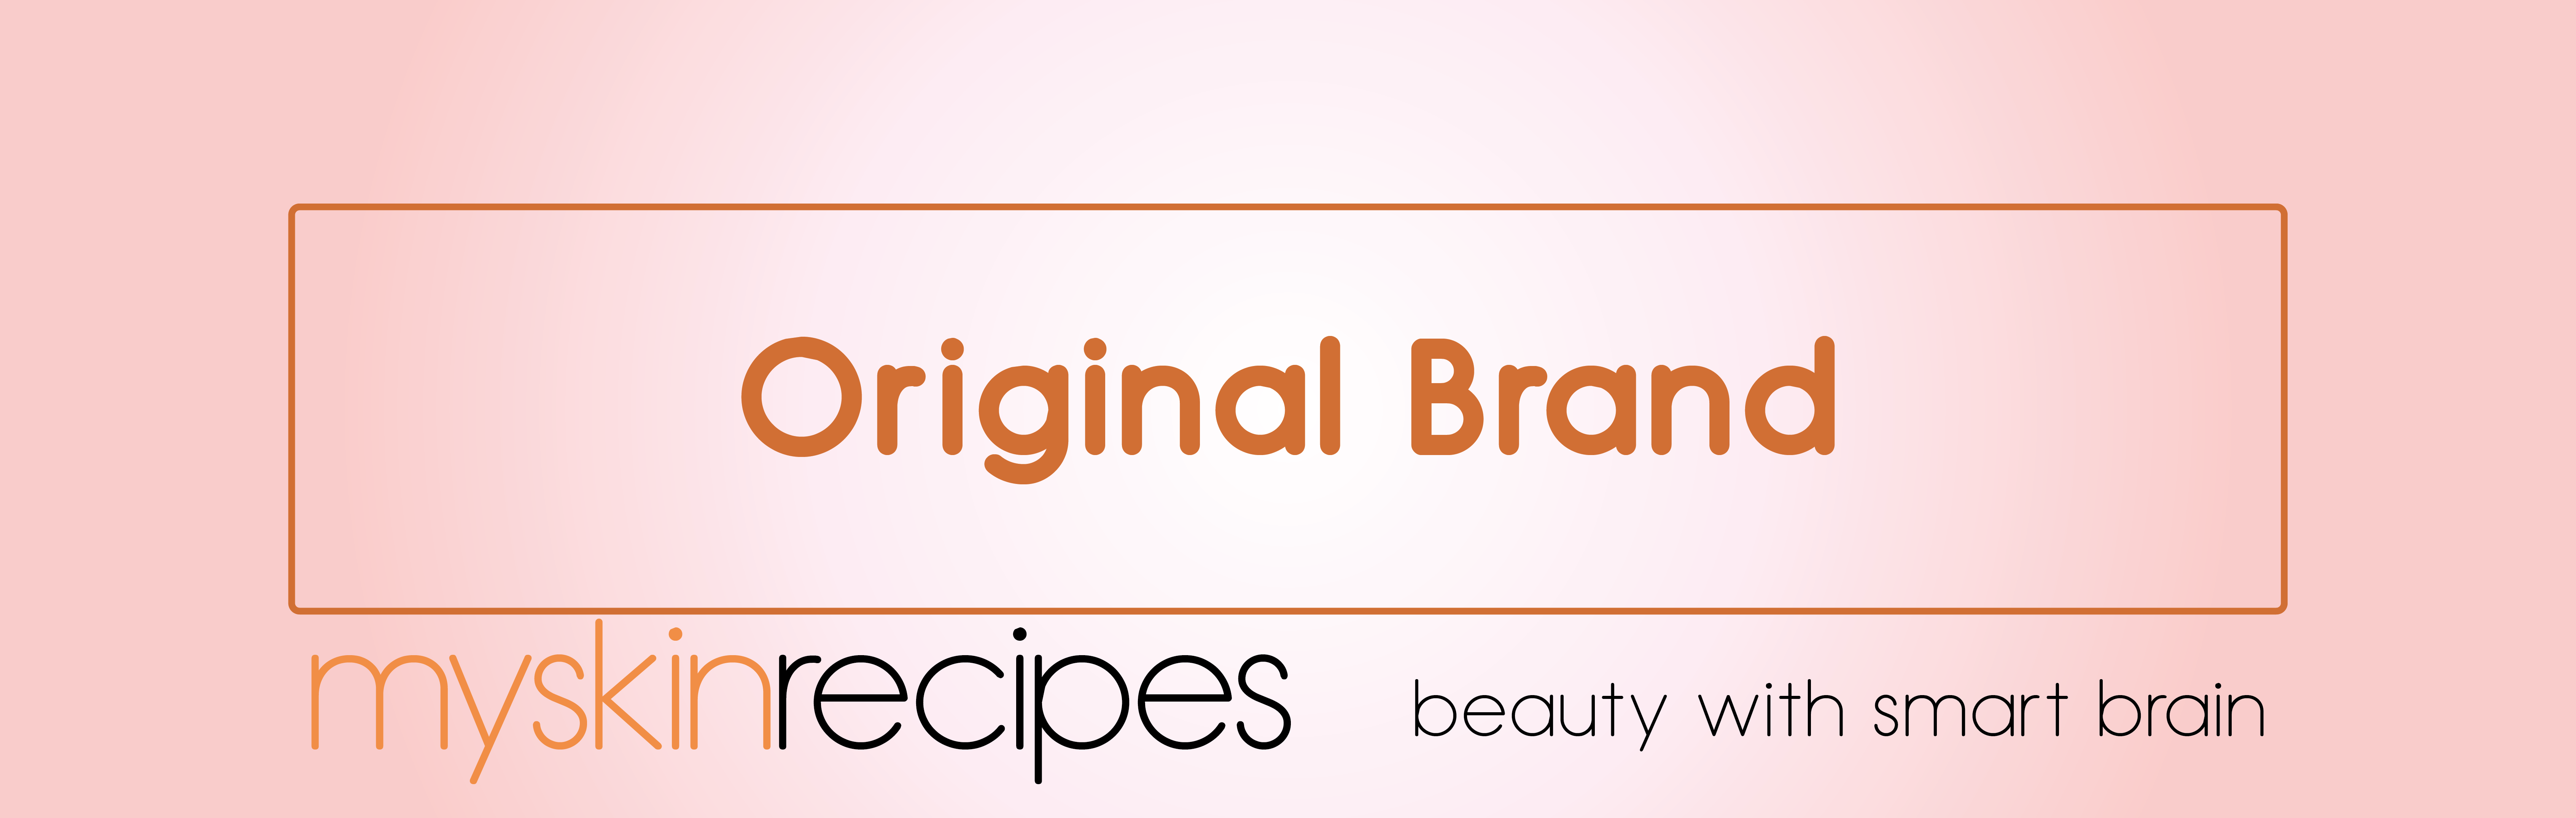 Original Brand﻿ Cosmetics Ingredients